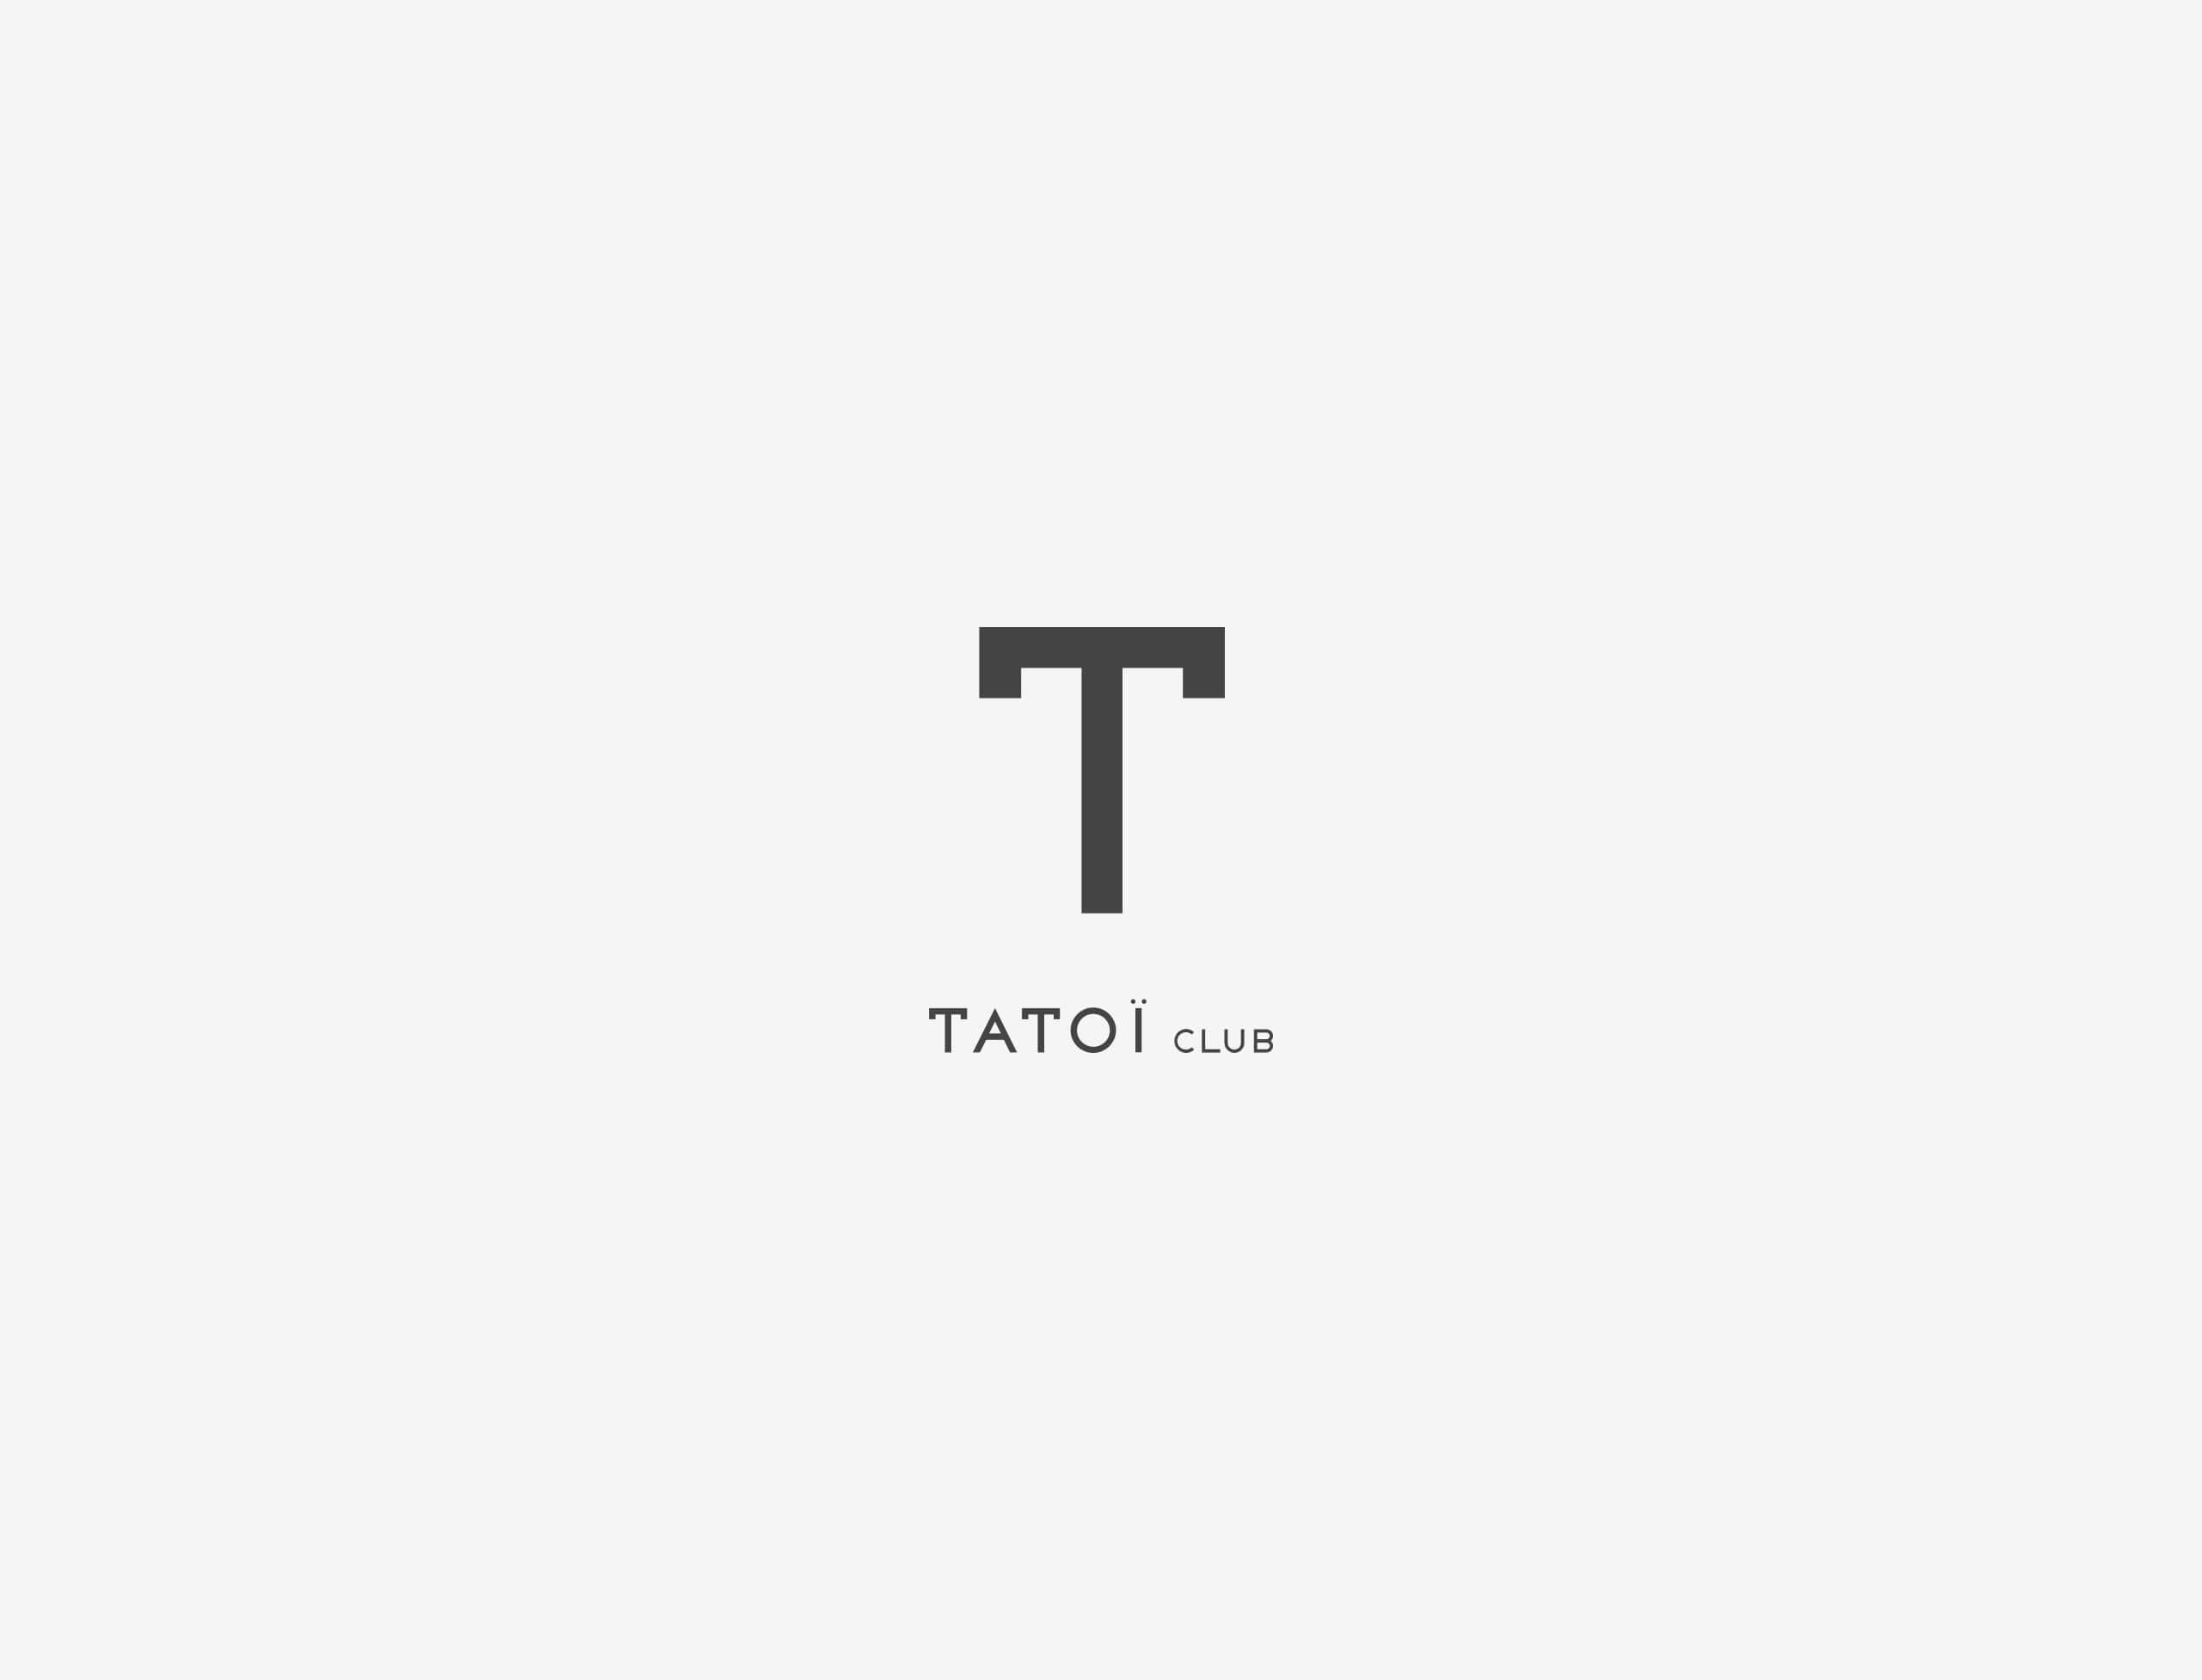 Tatoi Club